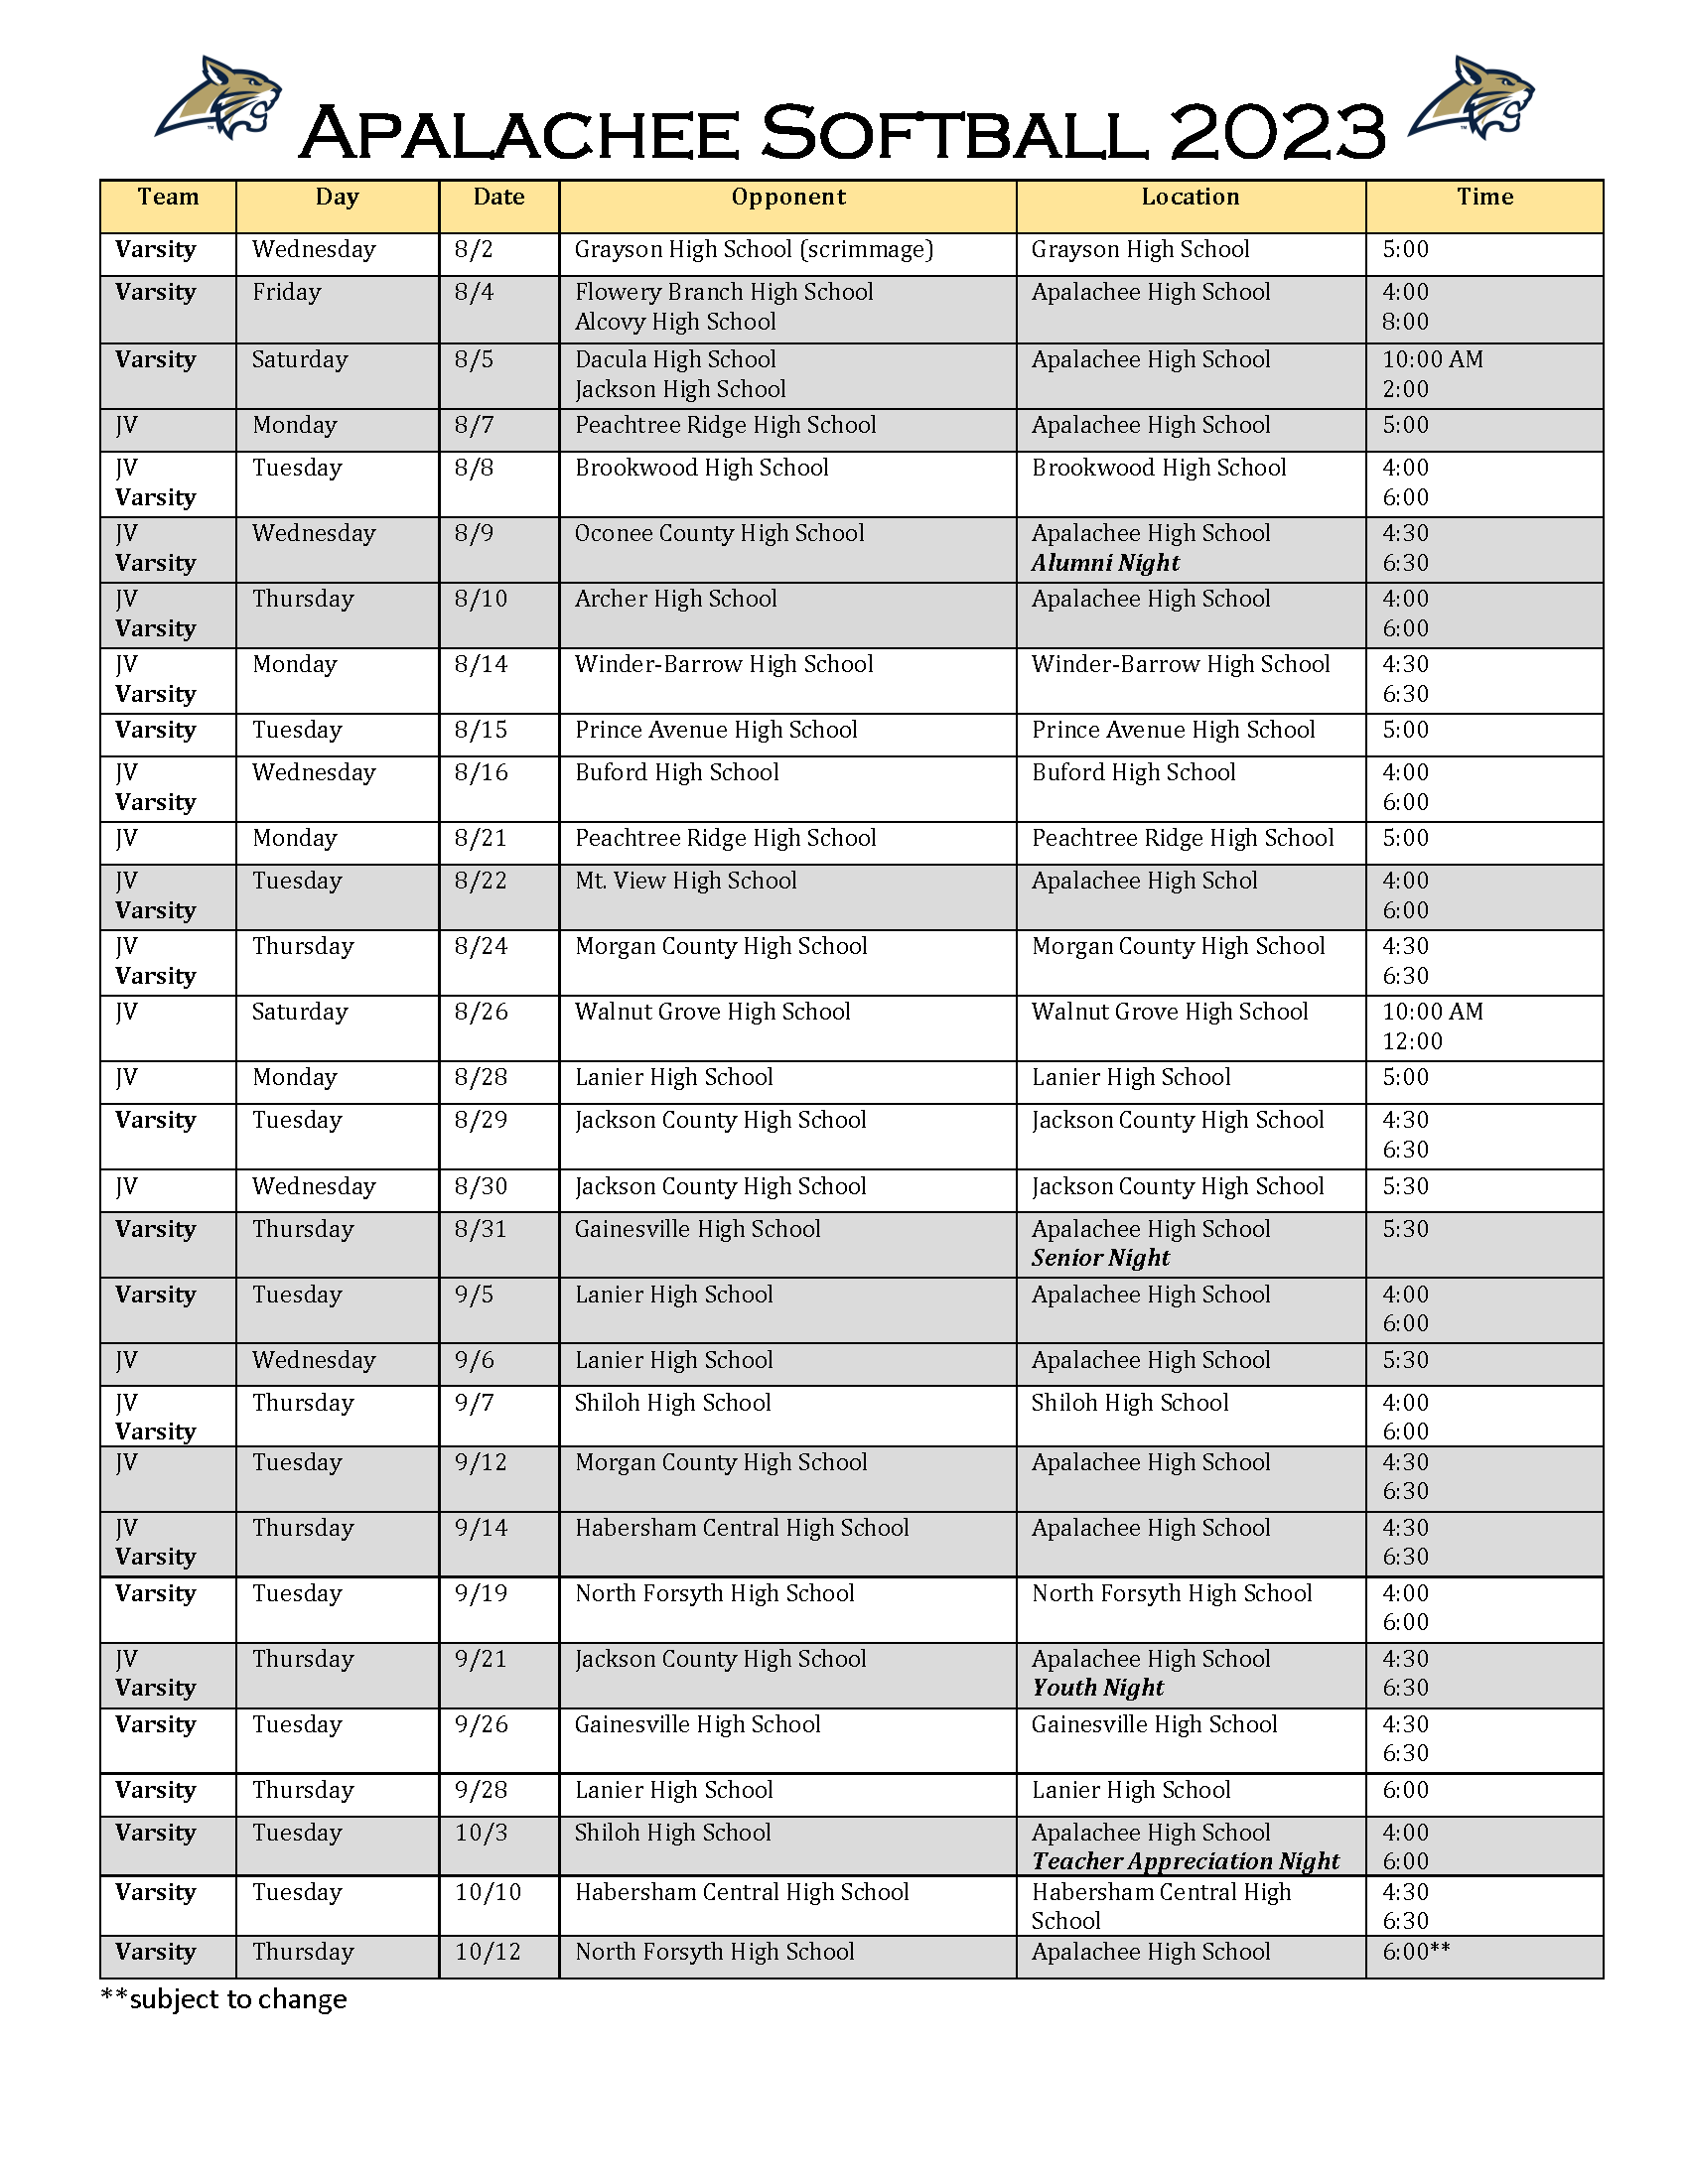 Softball Schedule